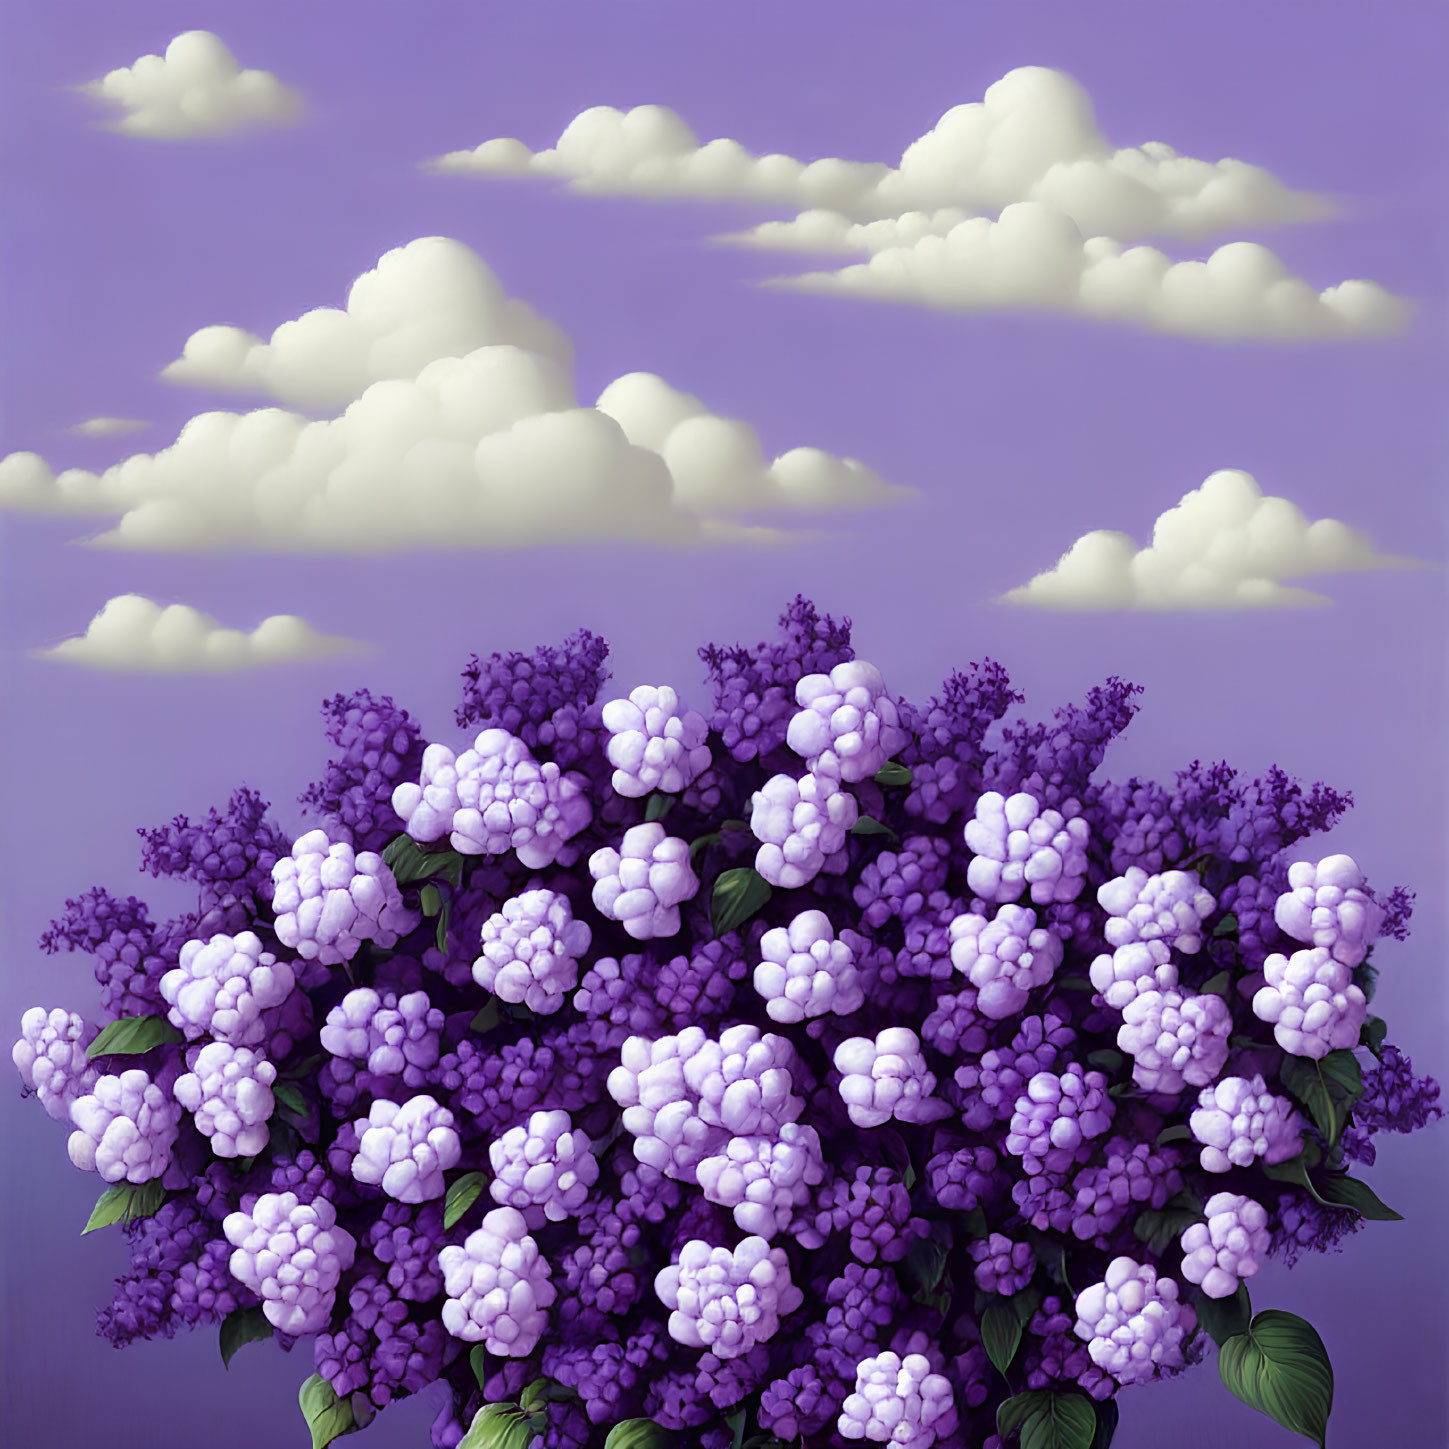 Purple Hydrangeas Bouquet on Purple Sky with White Clouds